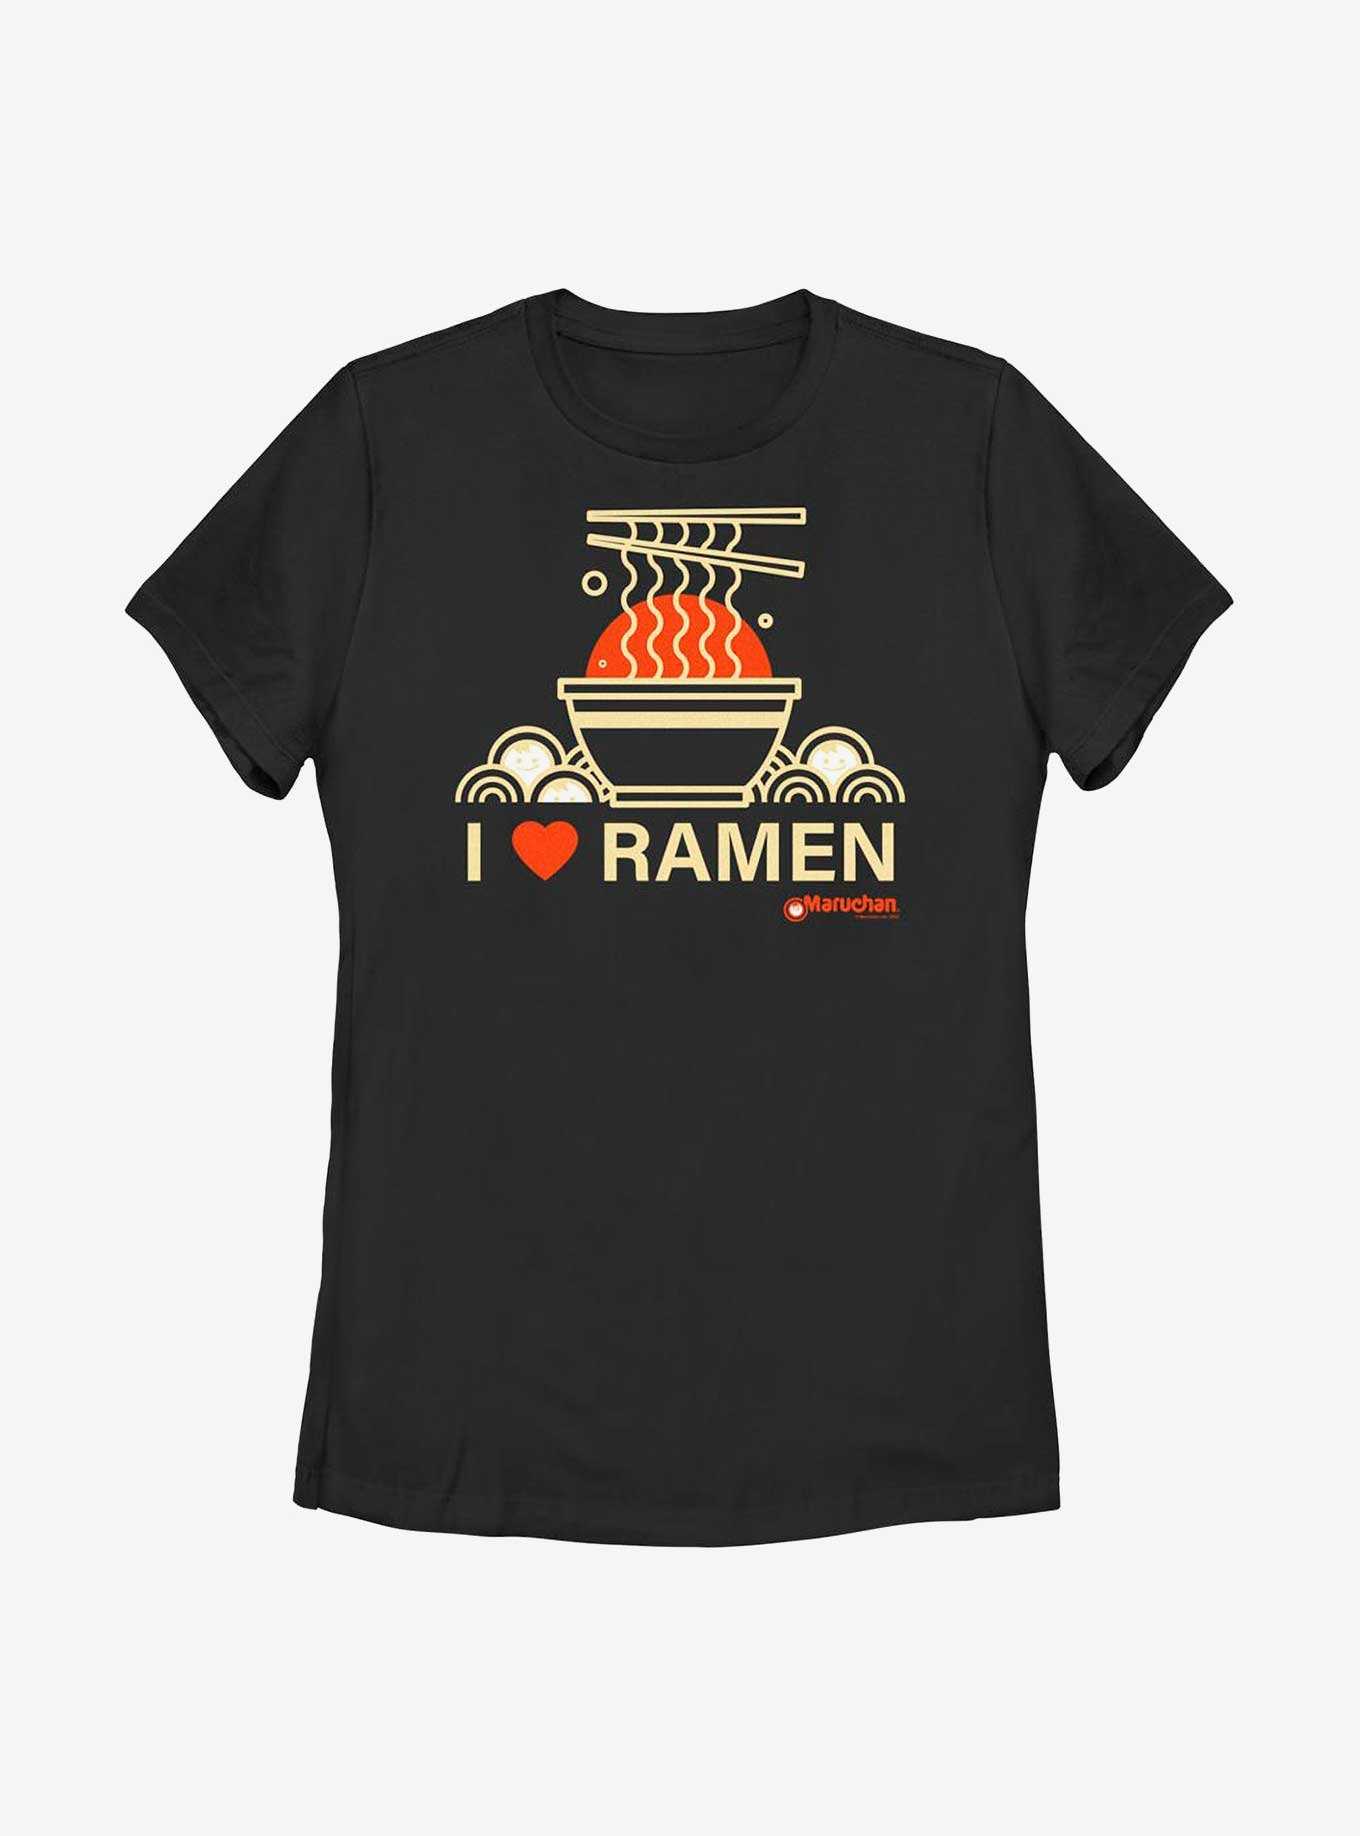 Maruchan Heart Ramen 4Eva Womens T-Shirt, , hi-res